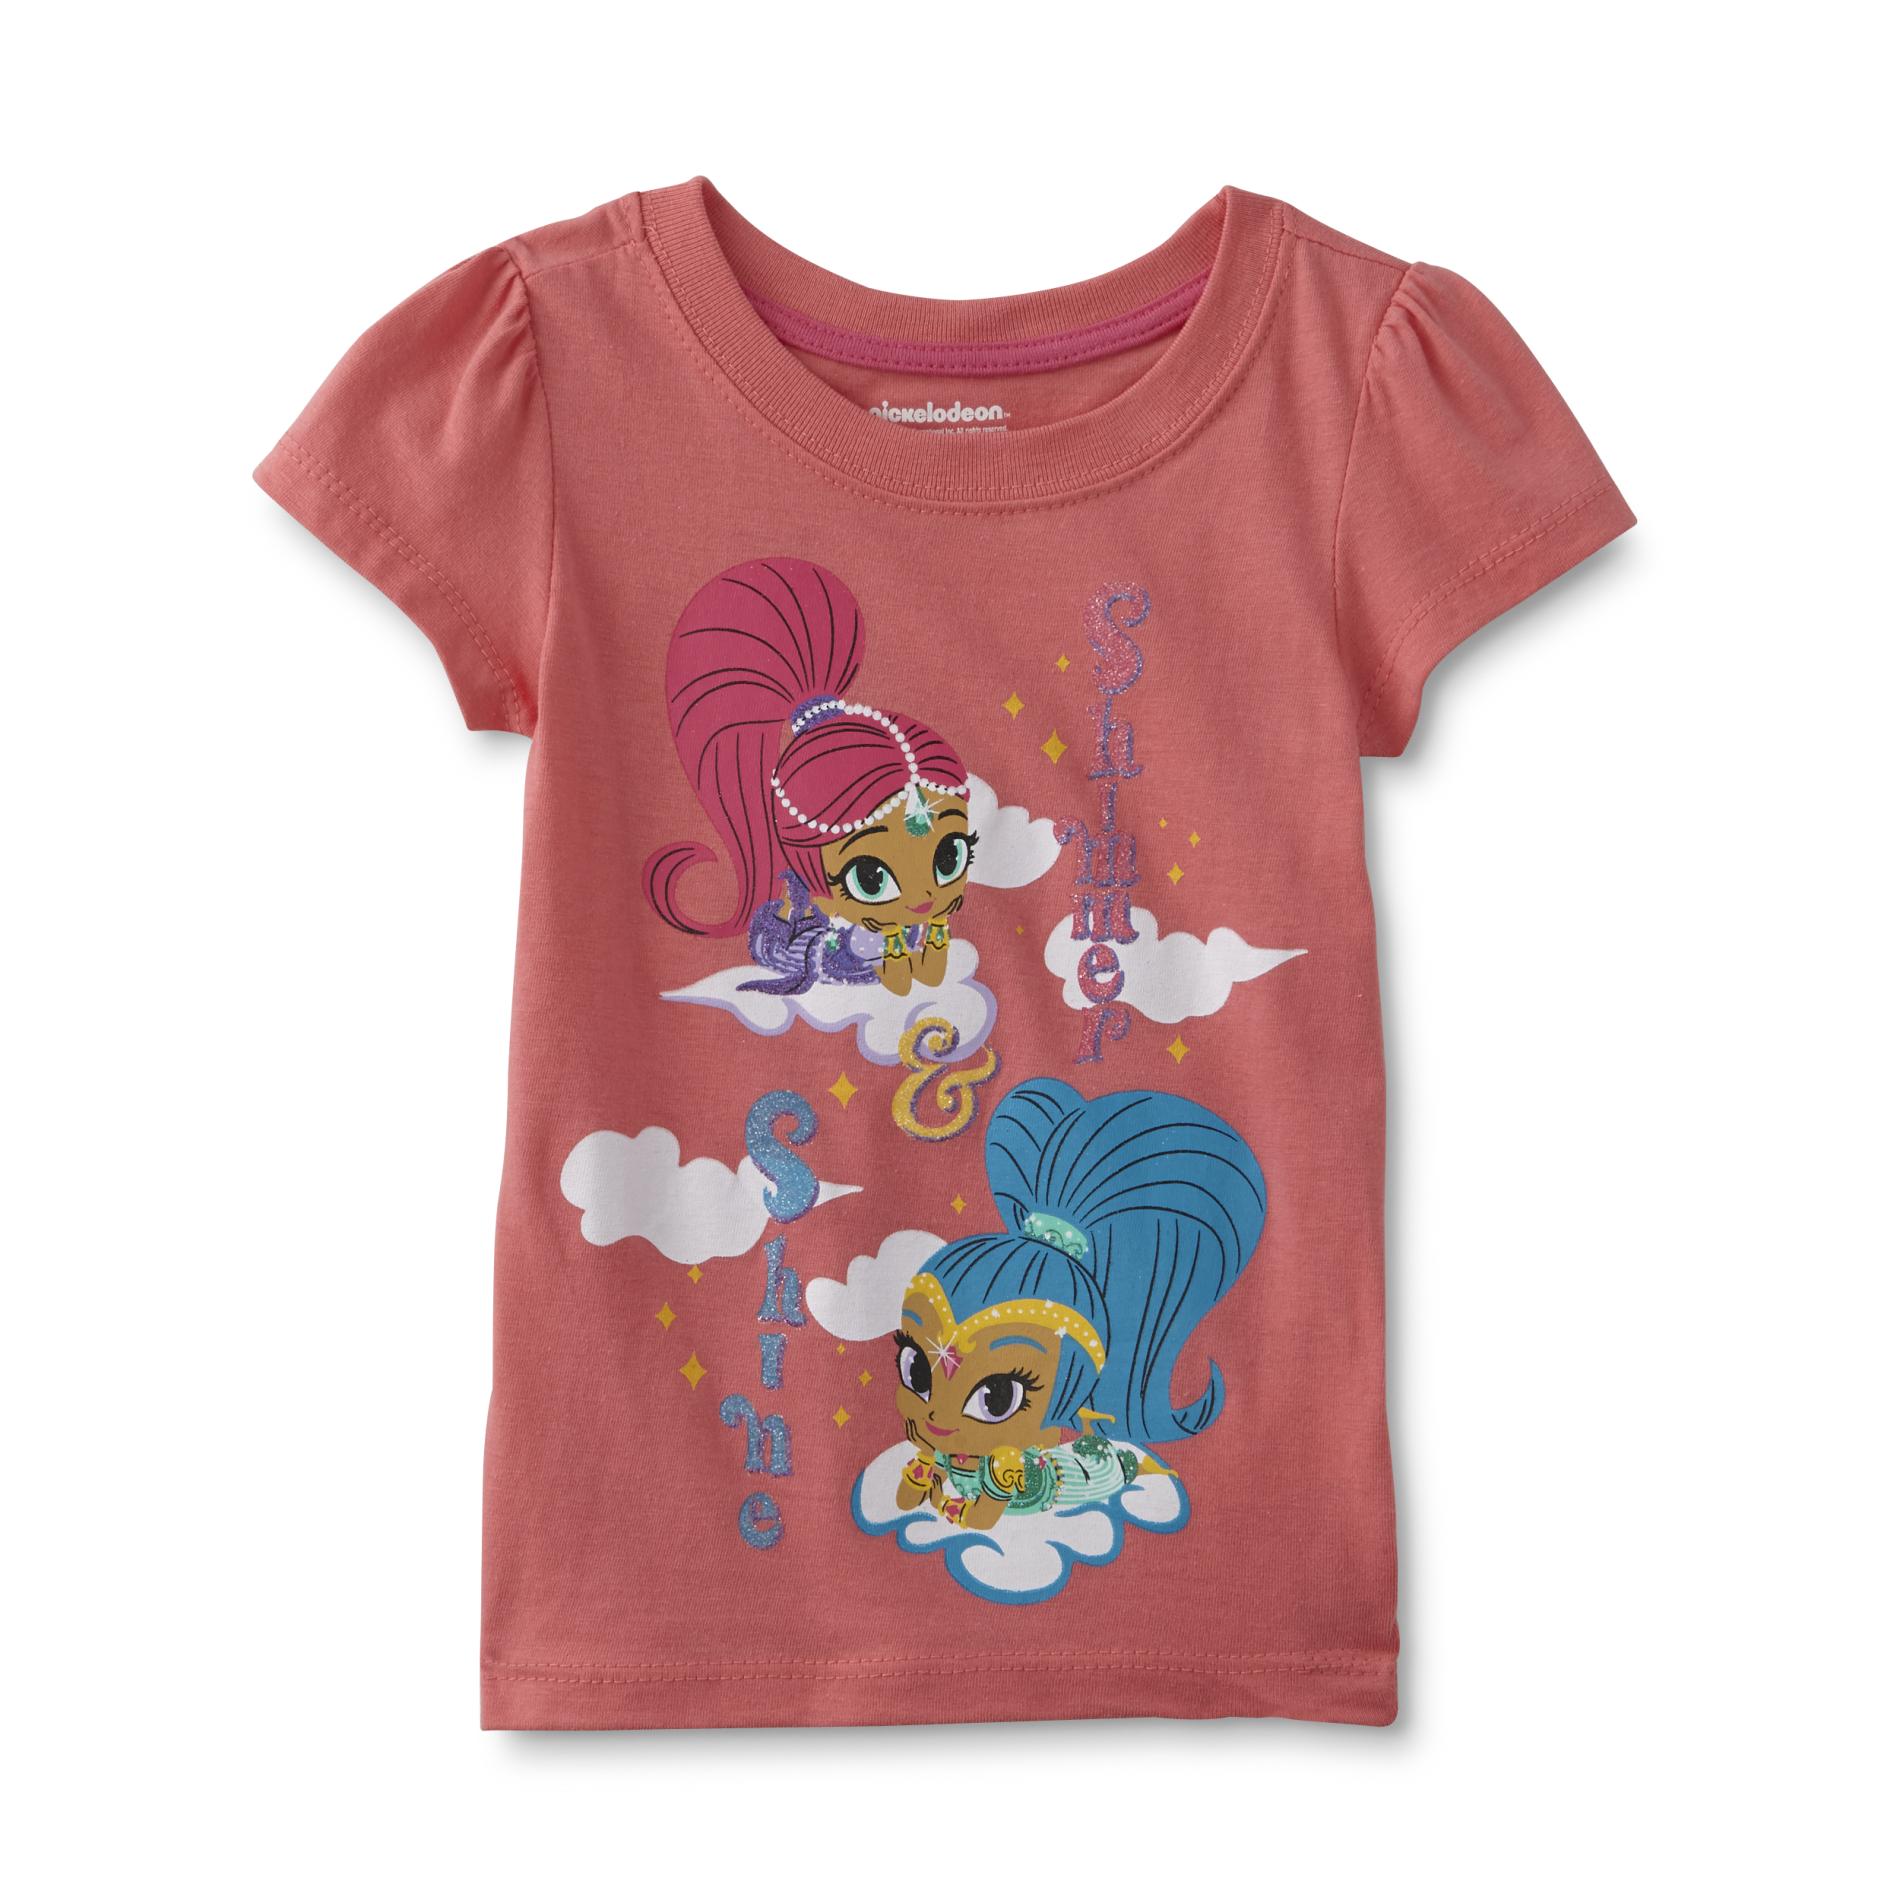 Nickelodeon Shimmer & Shine Toddler Girl's Graphic T-Shirt